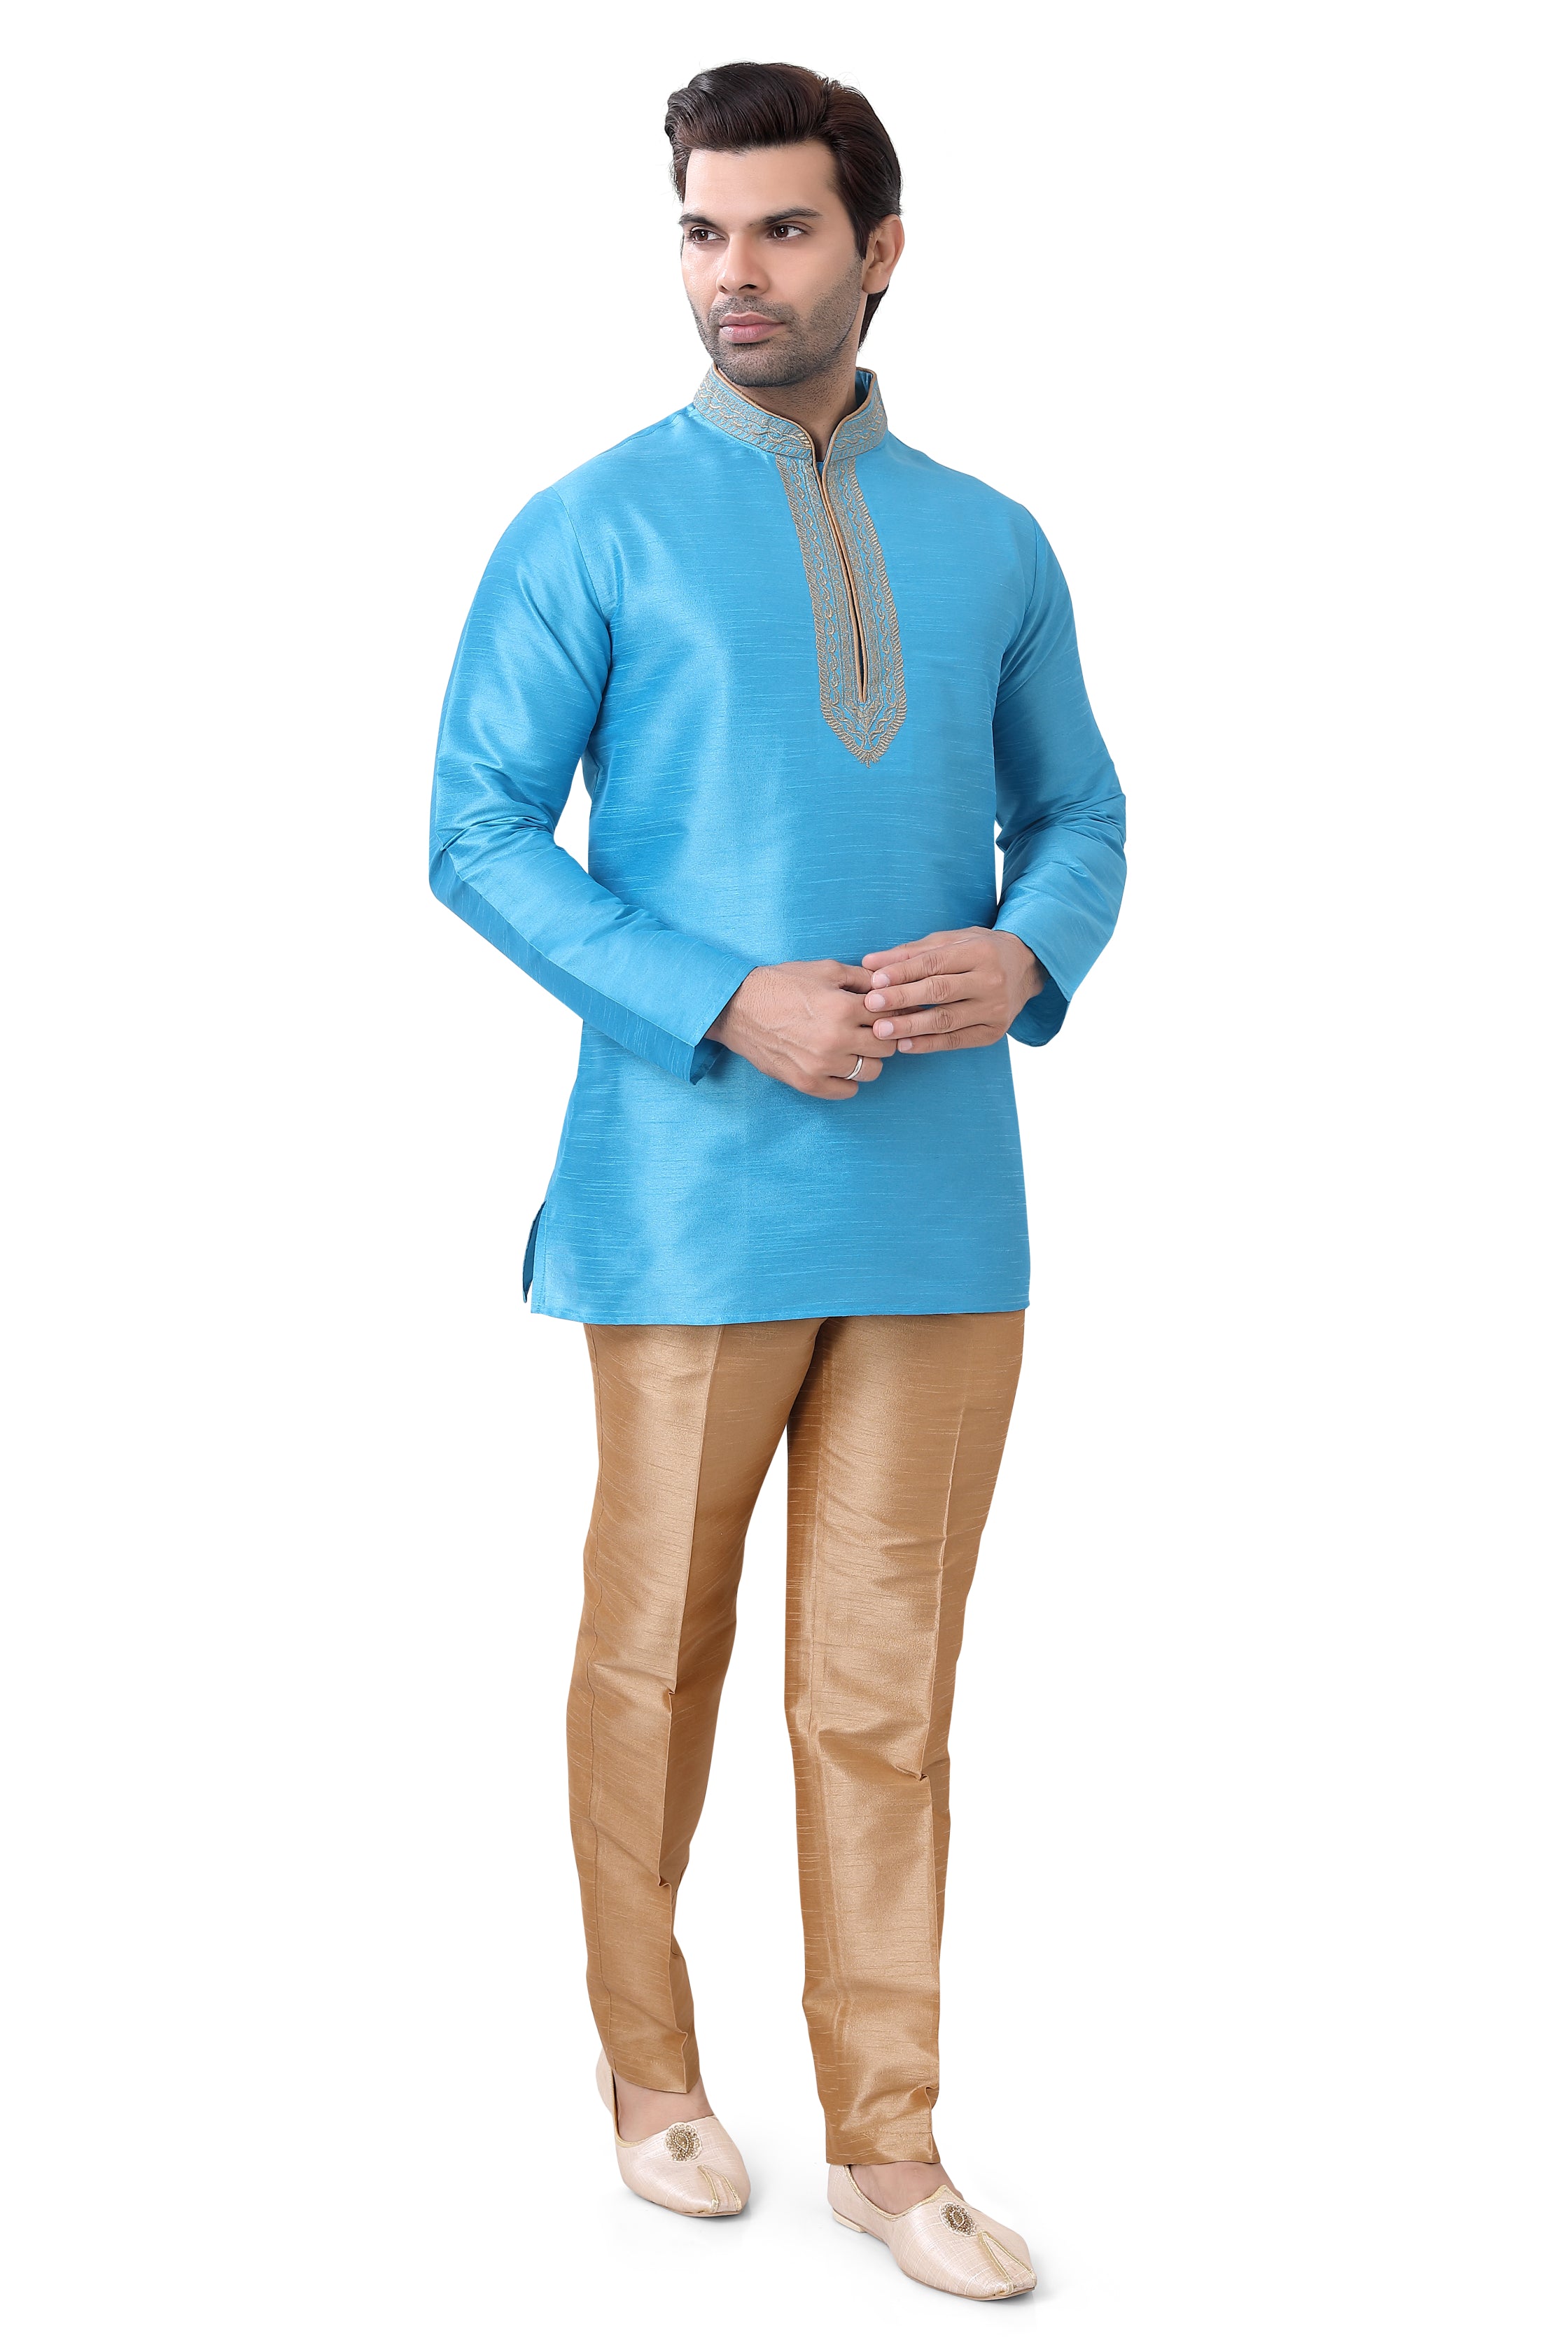 Banarasi Dupion Silk Short Kurta with embroidery in Light Blue color